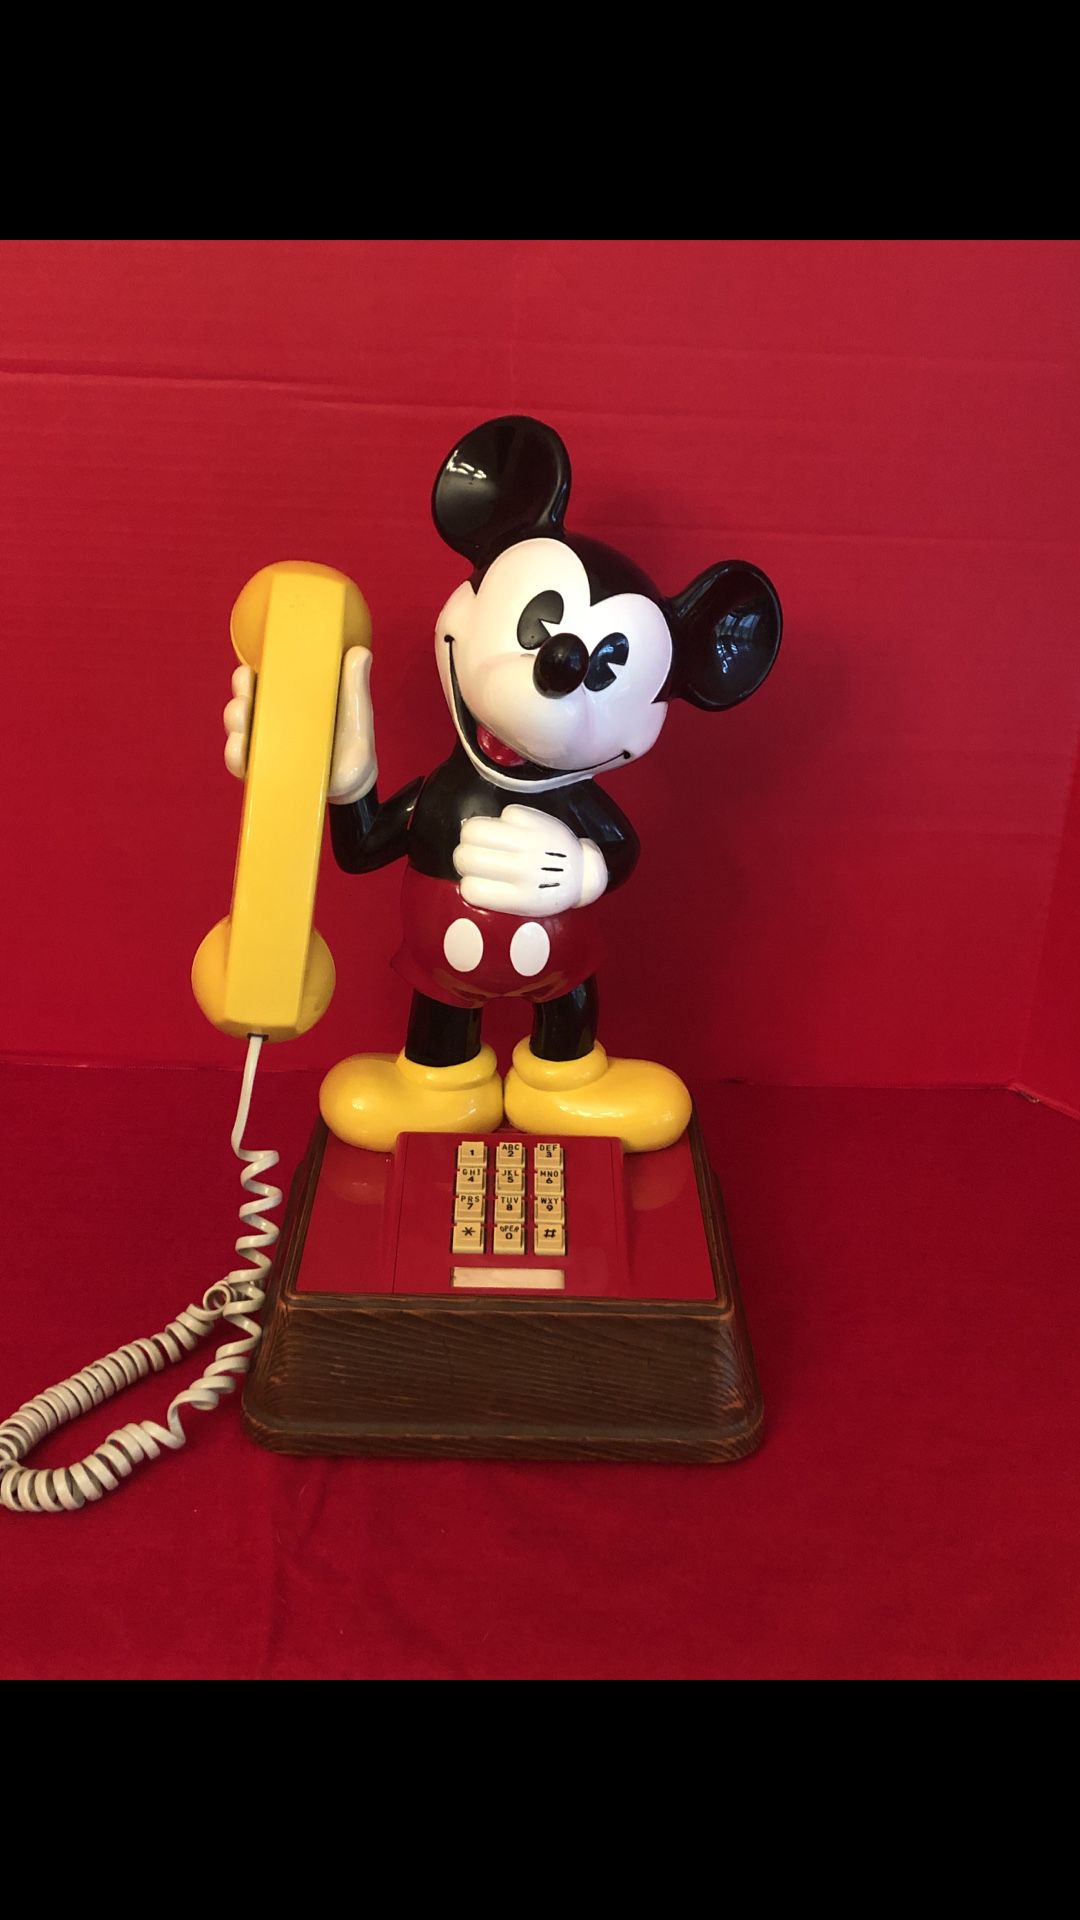 Disney Mickey Mouse touchtone phone